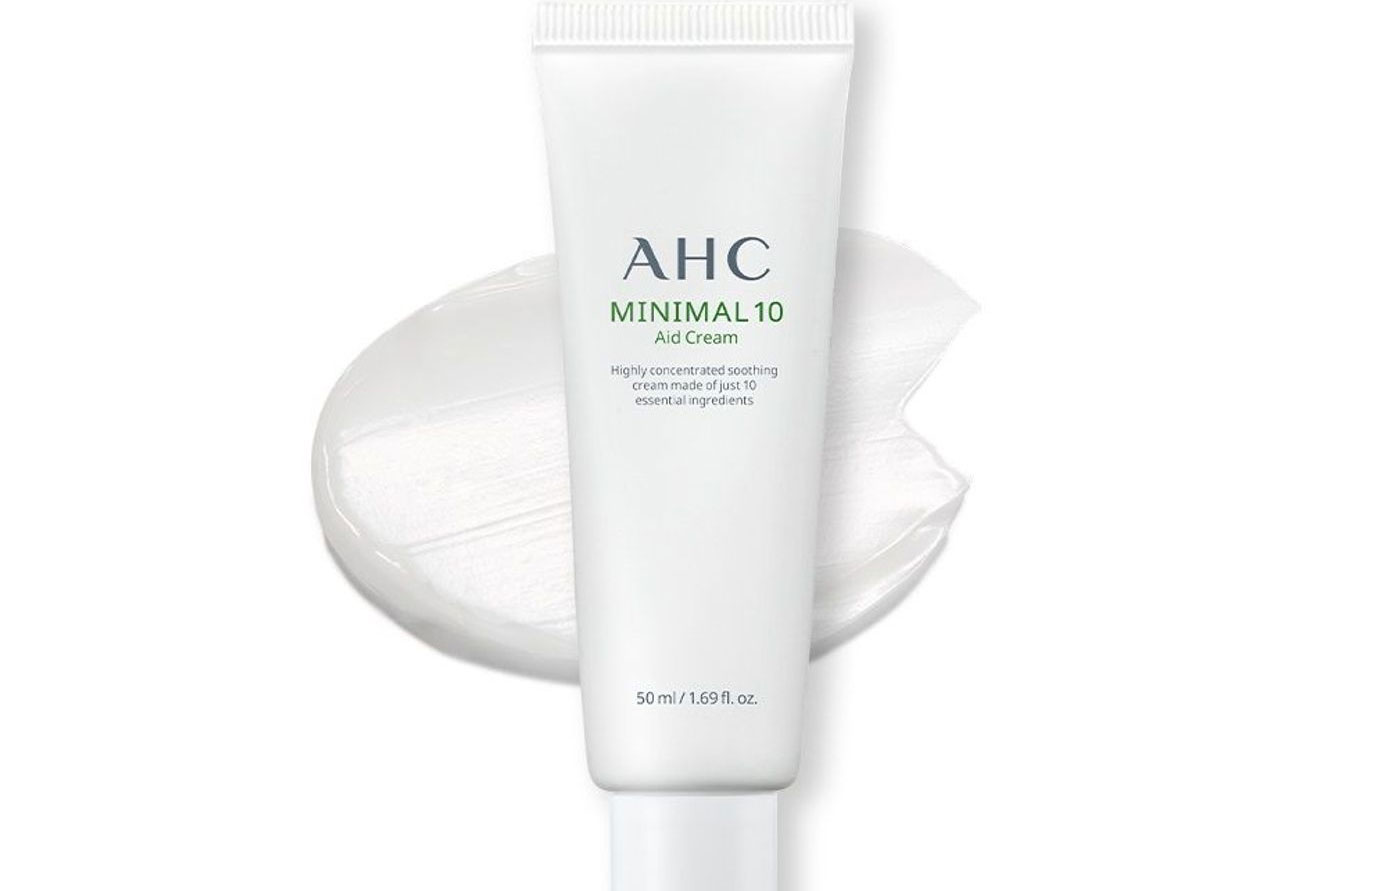 Kem dưỡng phục hồi da AHC Minimal 10 Aid Cream